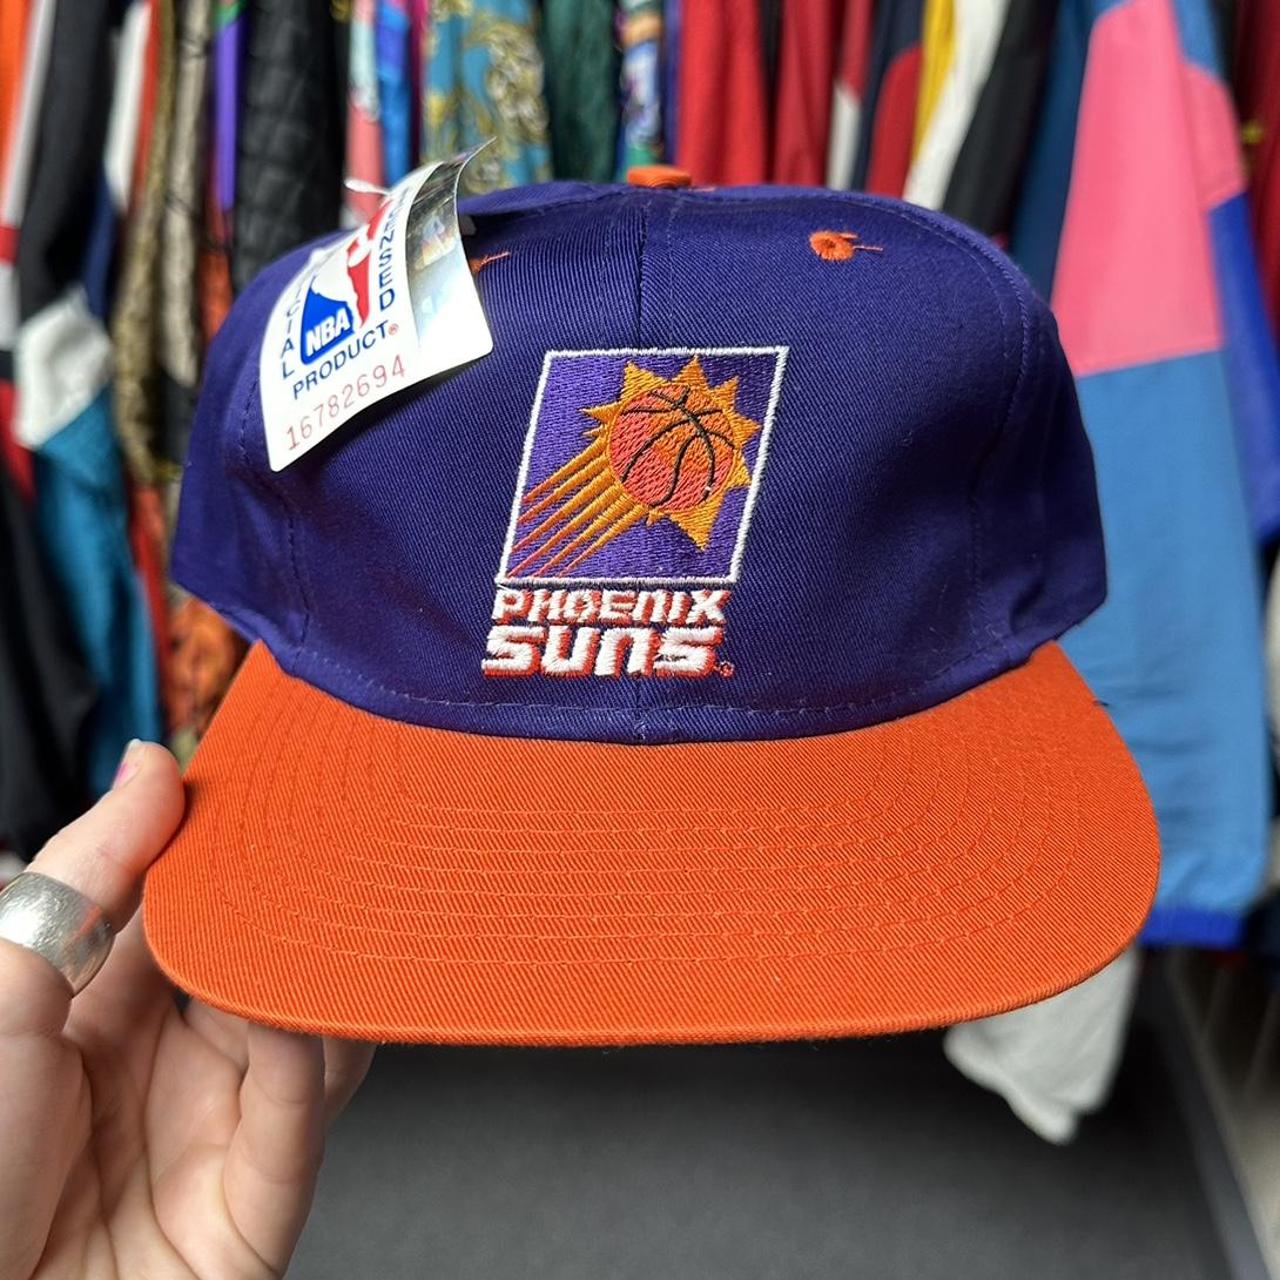 NBA Men's Hat - Orange